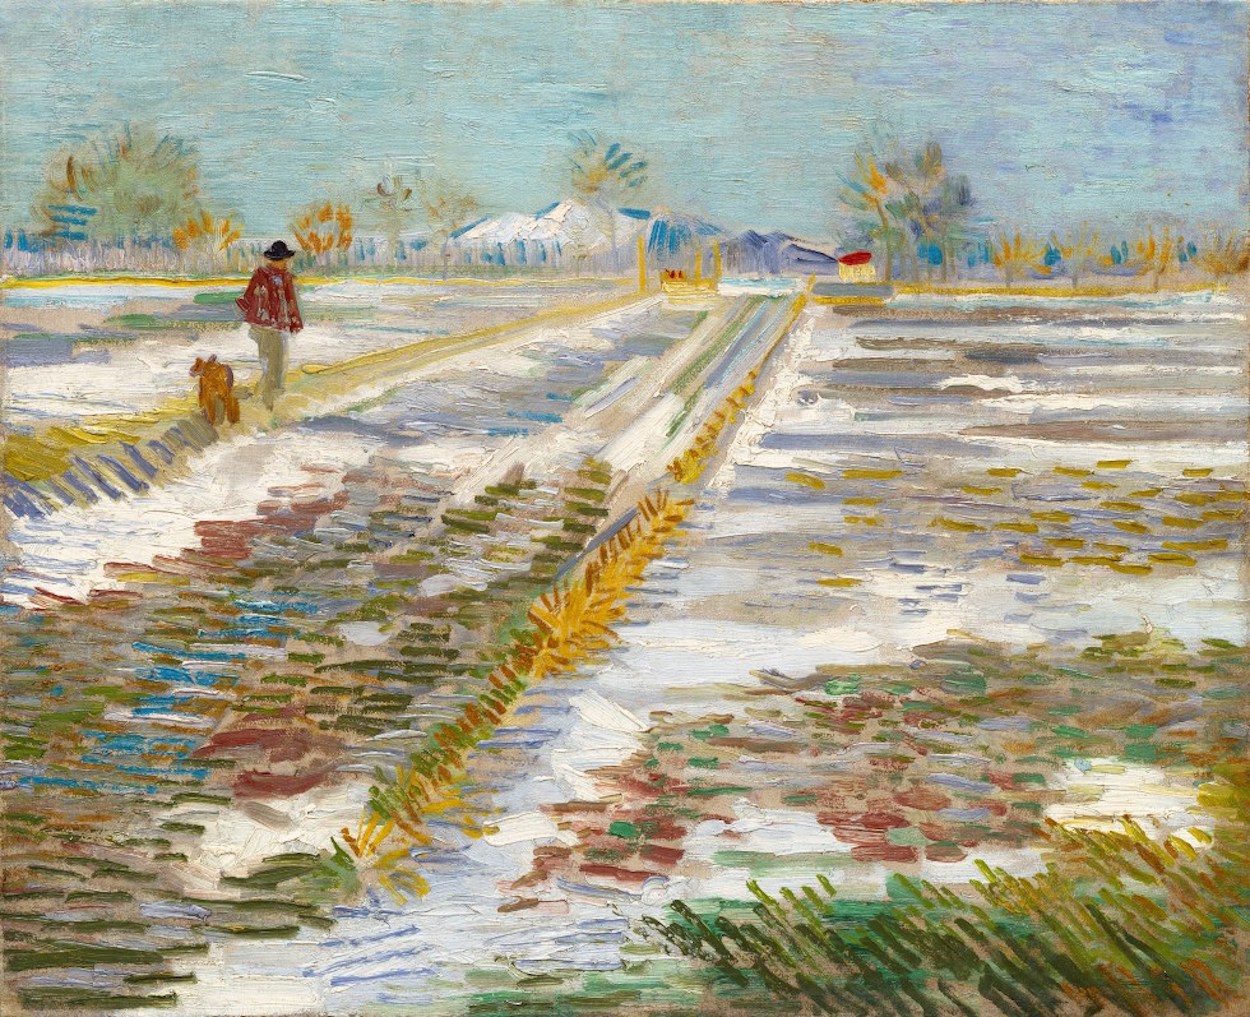 Landscape with Snow by Vincent van Gogh - February 1888 - 38.2 x 46.2 cm Solomon R. Guggenheim Museum